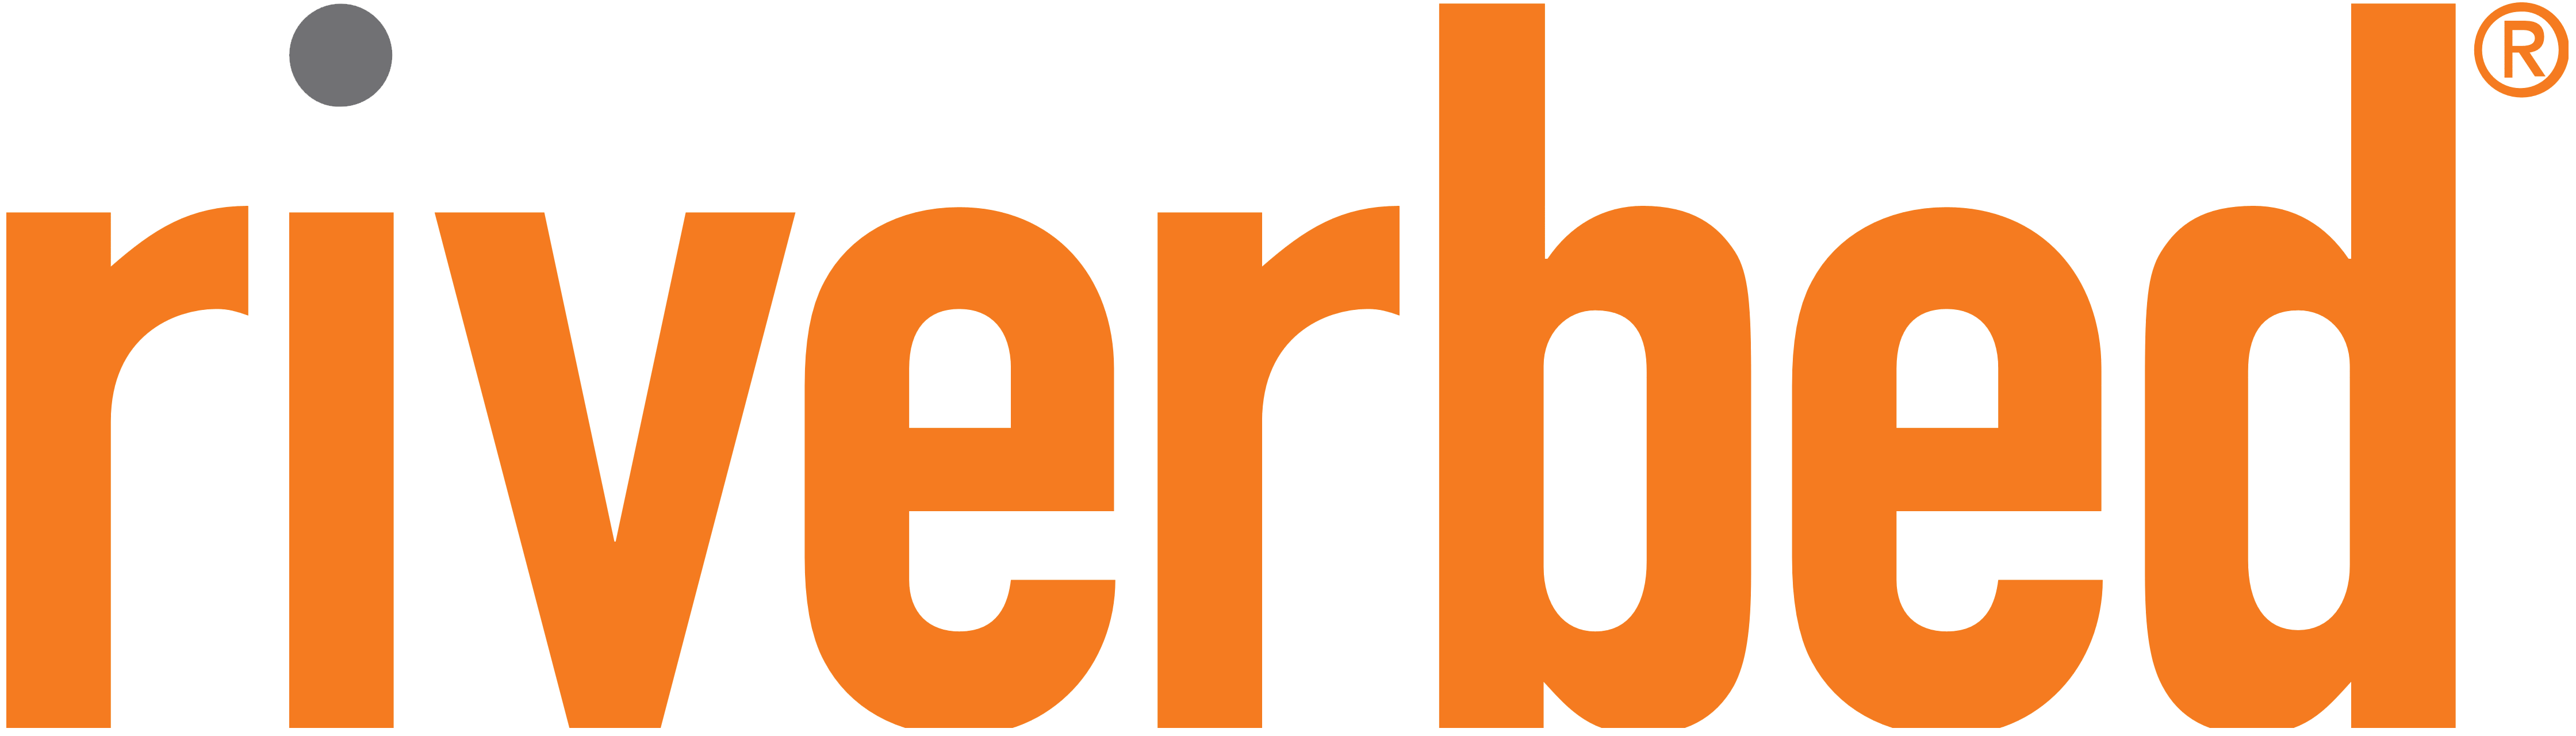 Riverbed_logo_logotipo